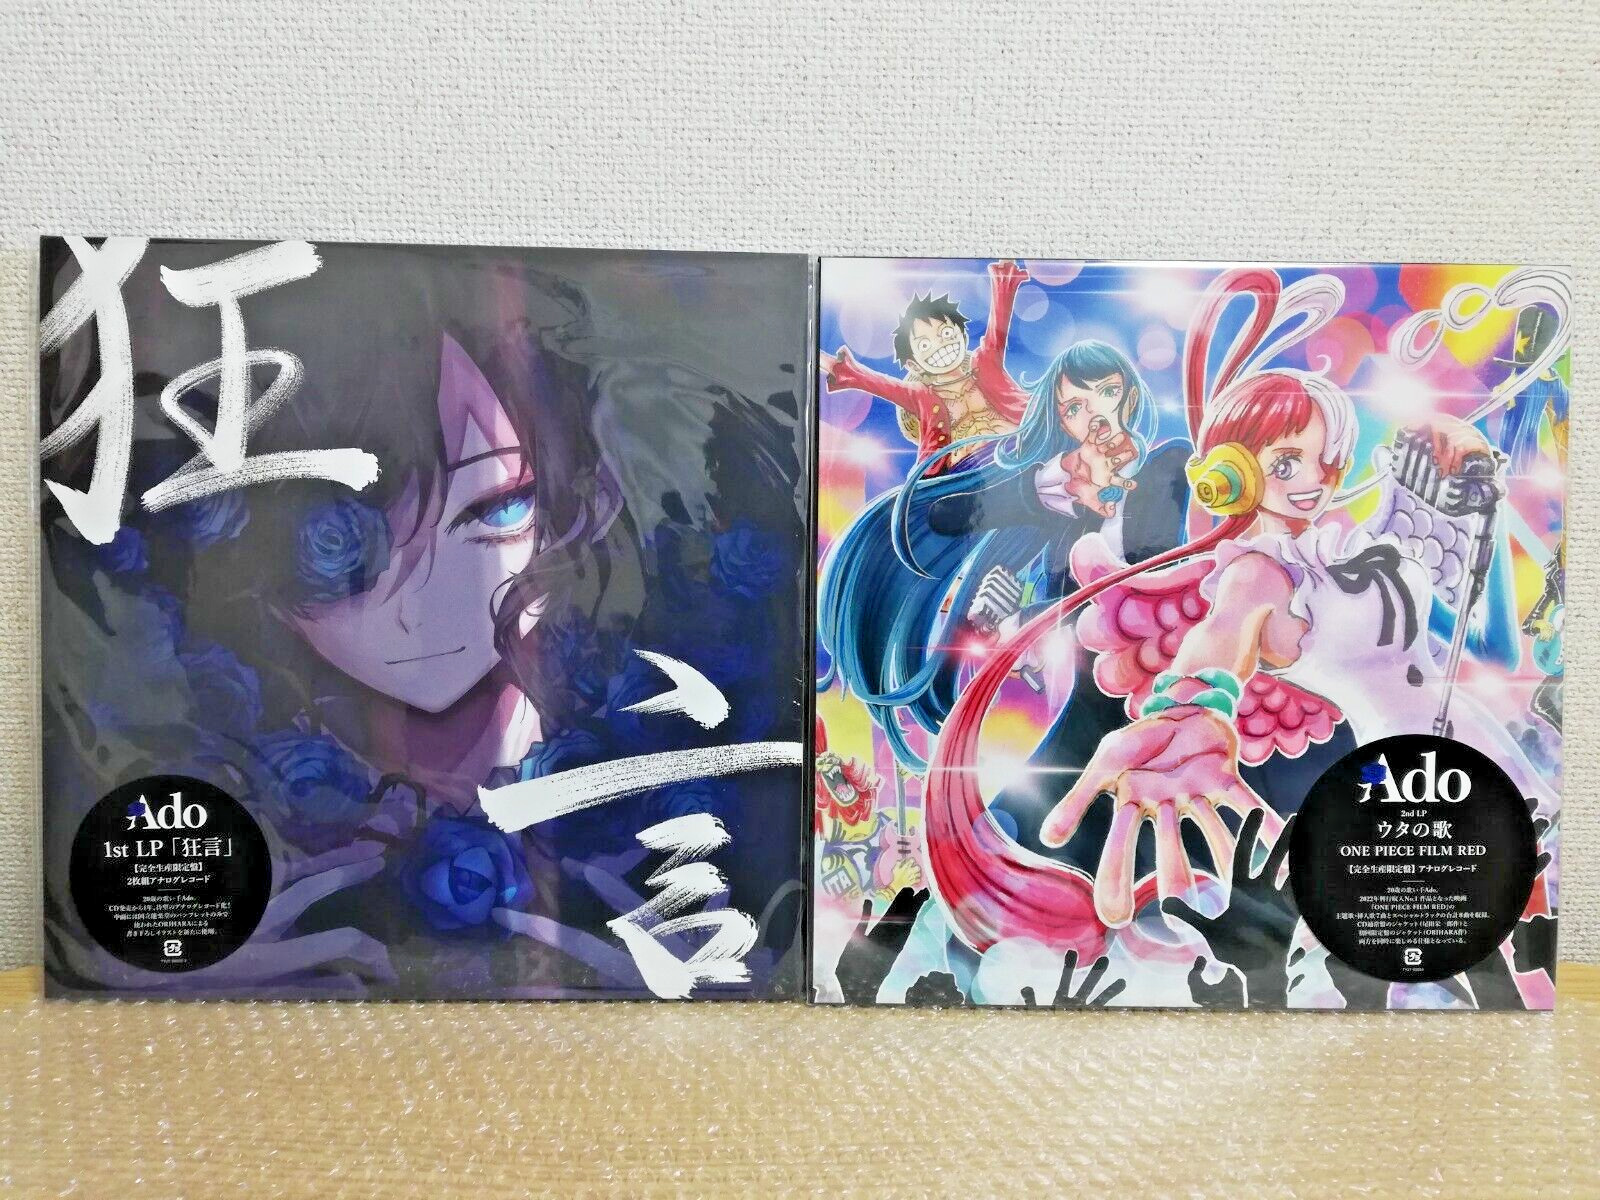 Ado Kyogen Uta no Uta One Piece Film Red Limited Edition Vinyl LP Set 1day